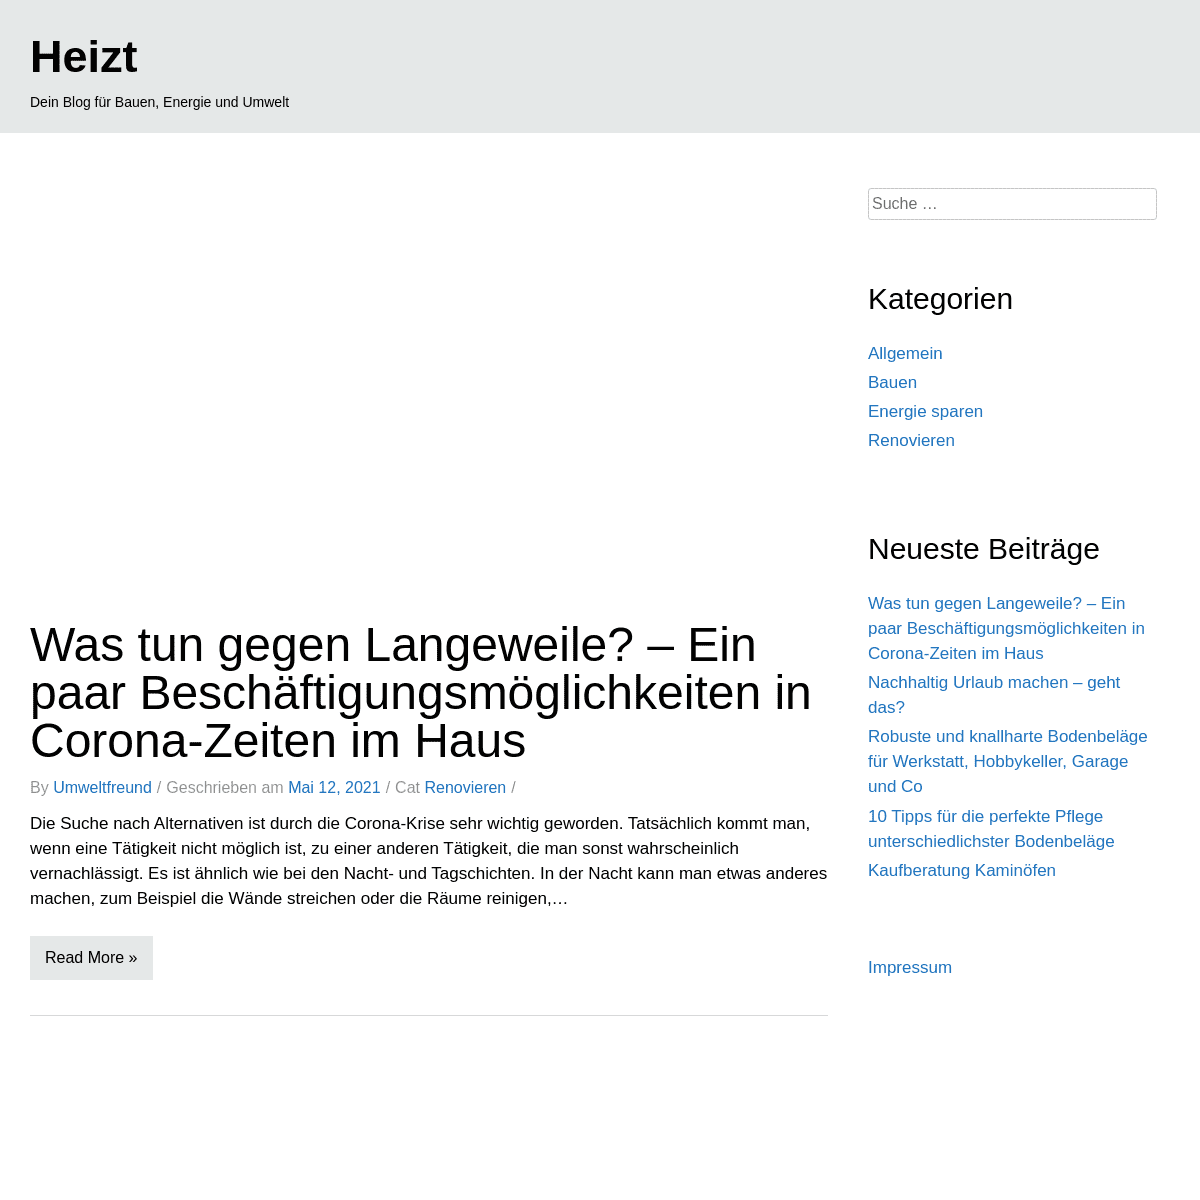 A complete backup of https://heizt.de